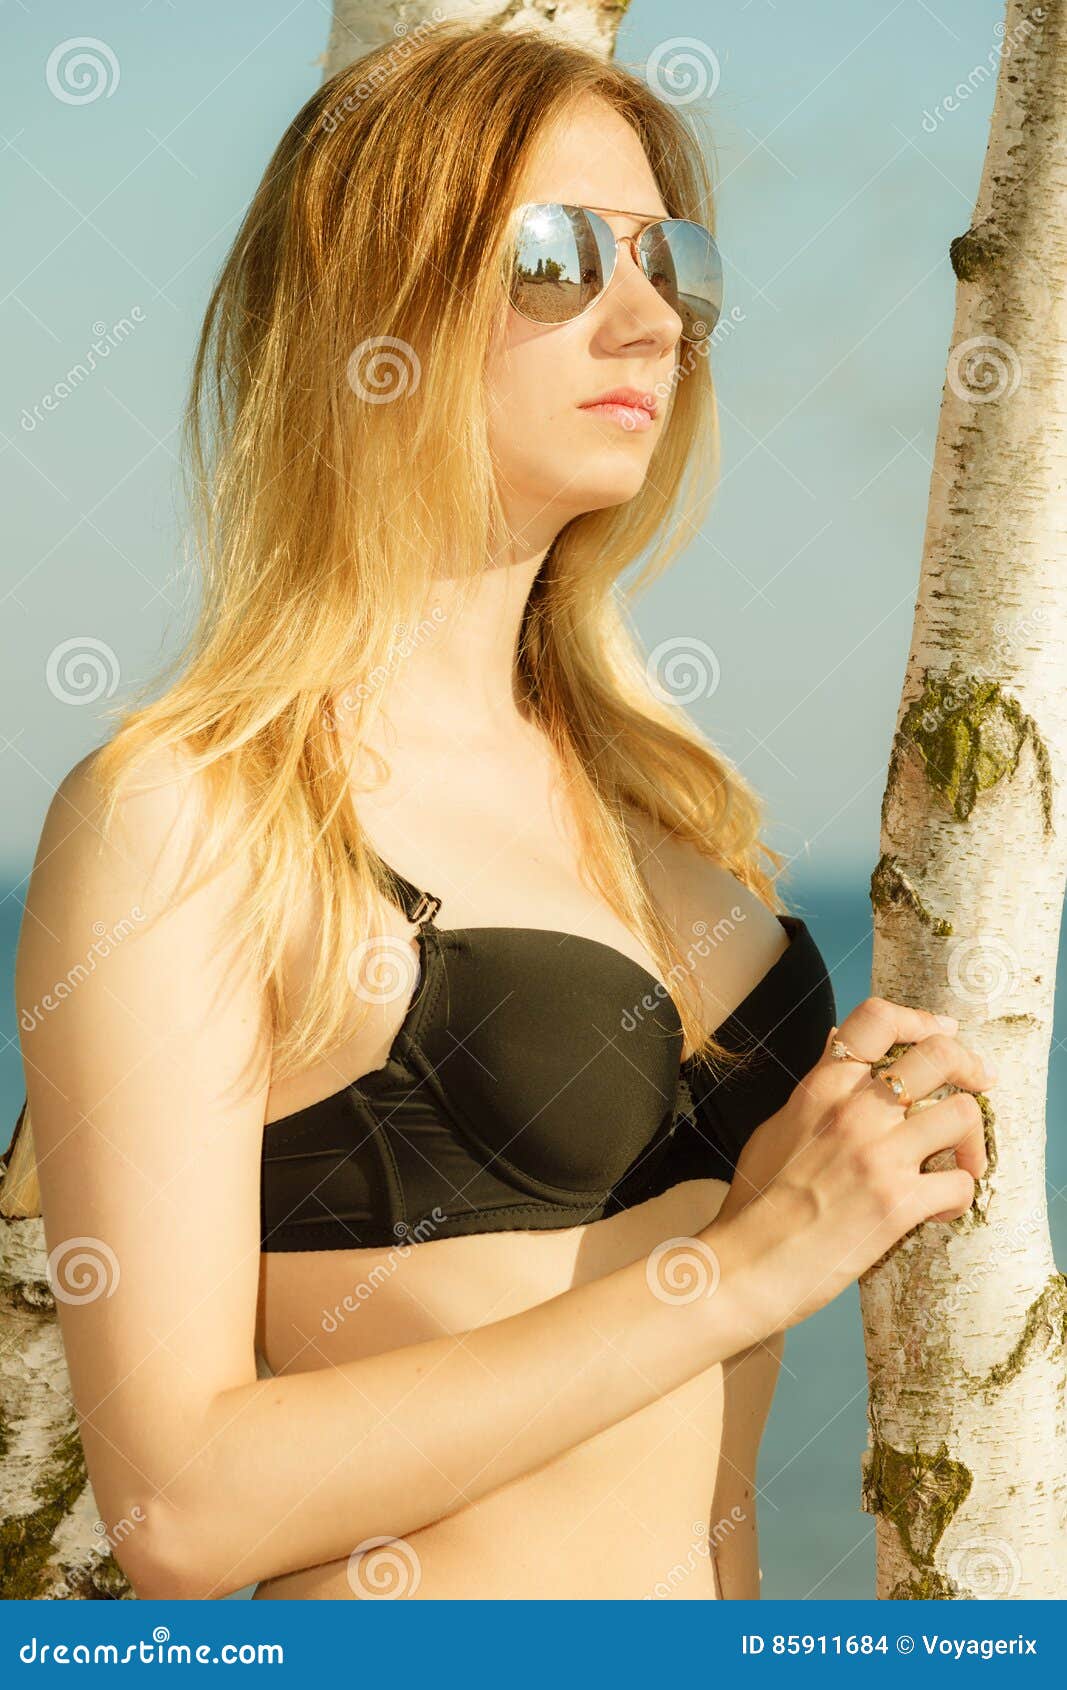 Woman Wearing Black Bikini Posing Next To Tree Stock Photo Image Of 42612 Hot Sex Picture